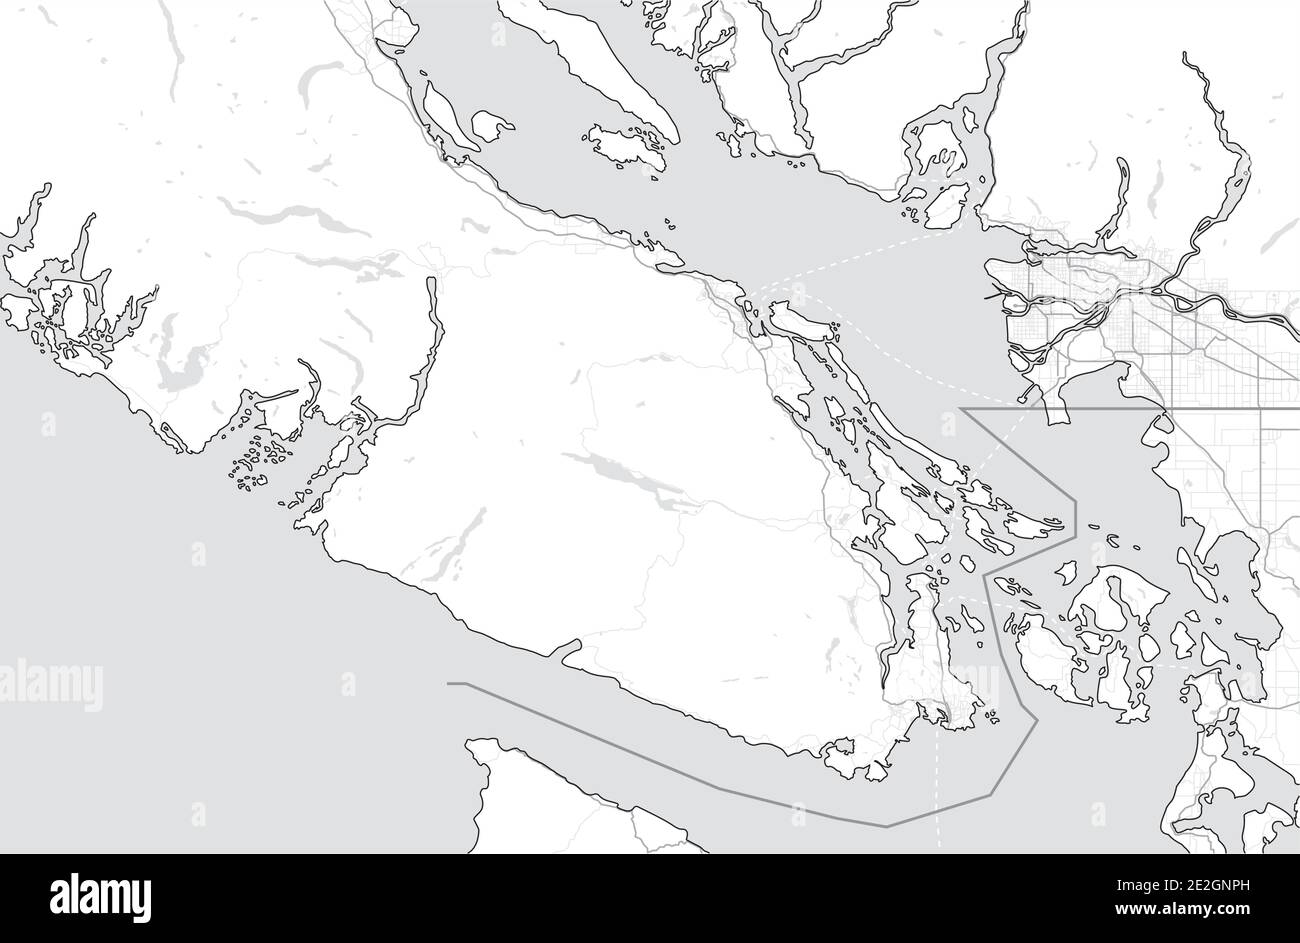 Karte von Vancouver Island (Nanaimo, Victoria, Tofino) und Greater Vancouver. Kanada, British Columbia. Touristische Karte. Einfache Graustufenkarte ohne Text Stock Vektor